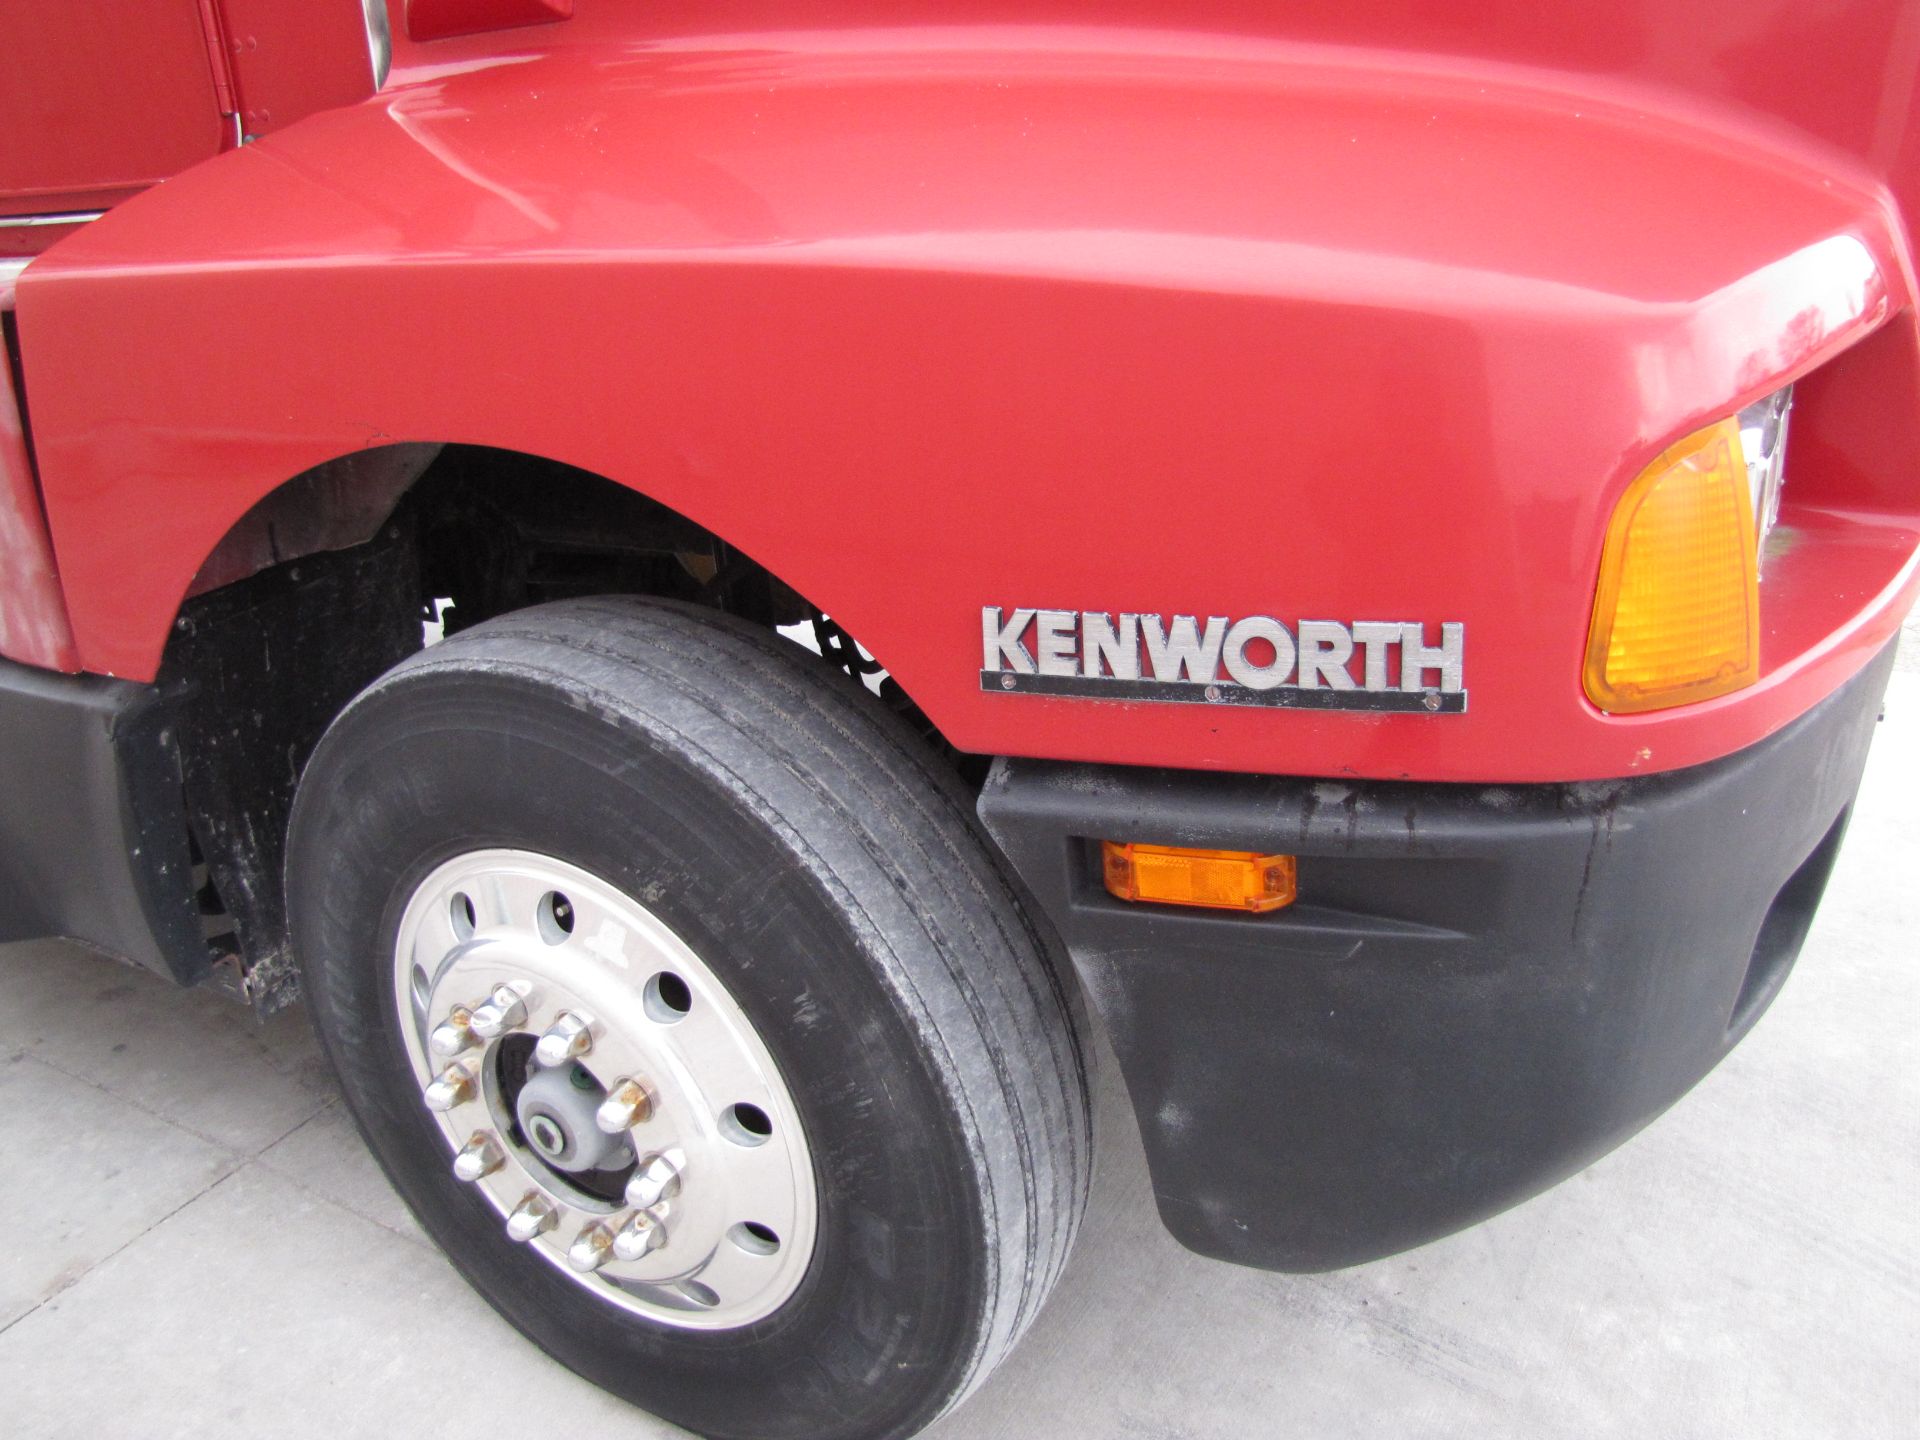 1992 Kenworth T600 semi truck - Image 81 of 83